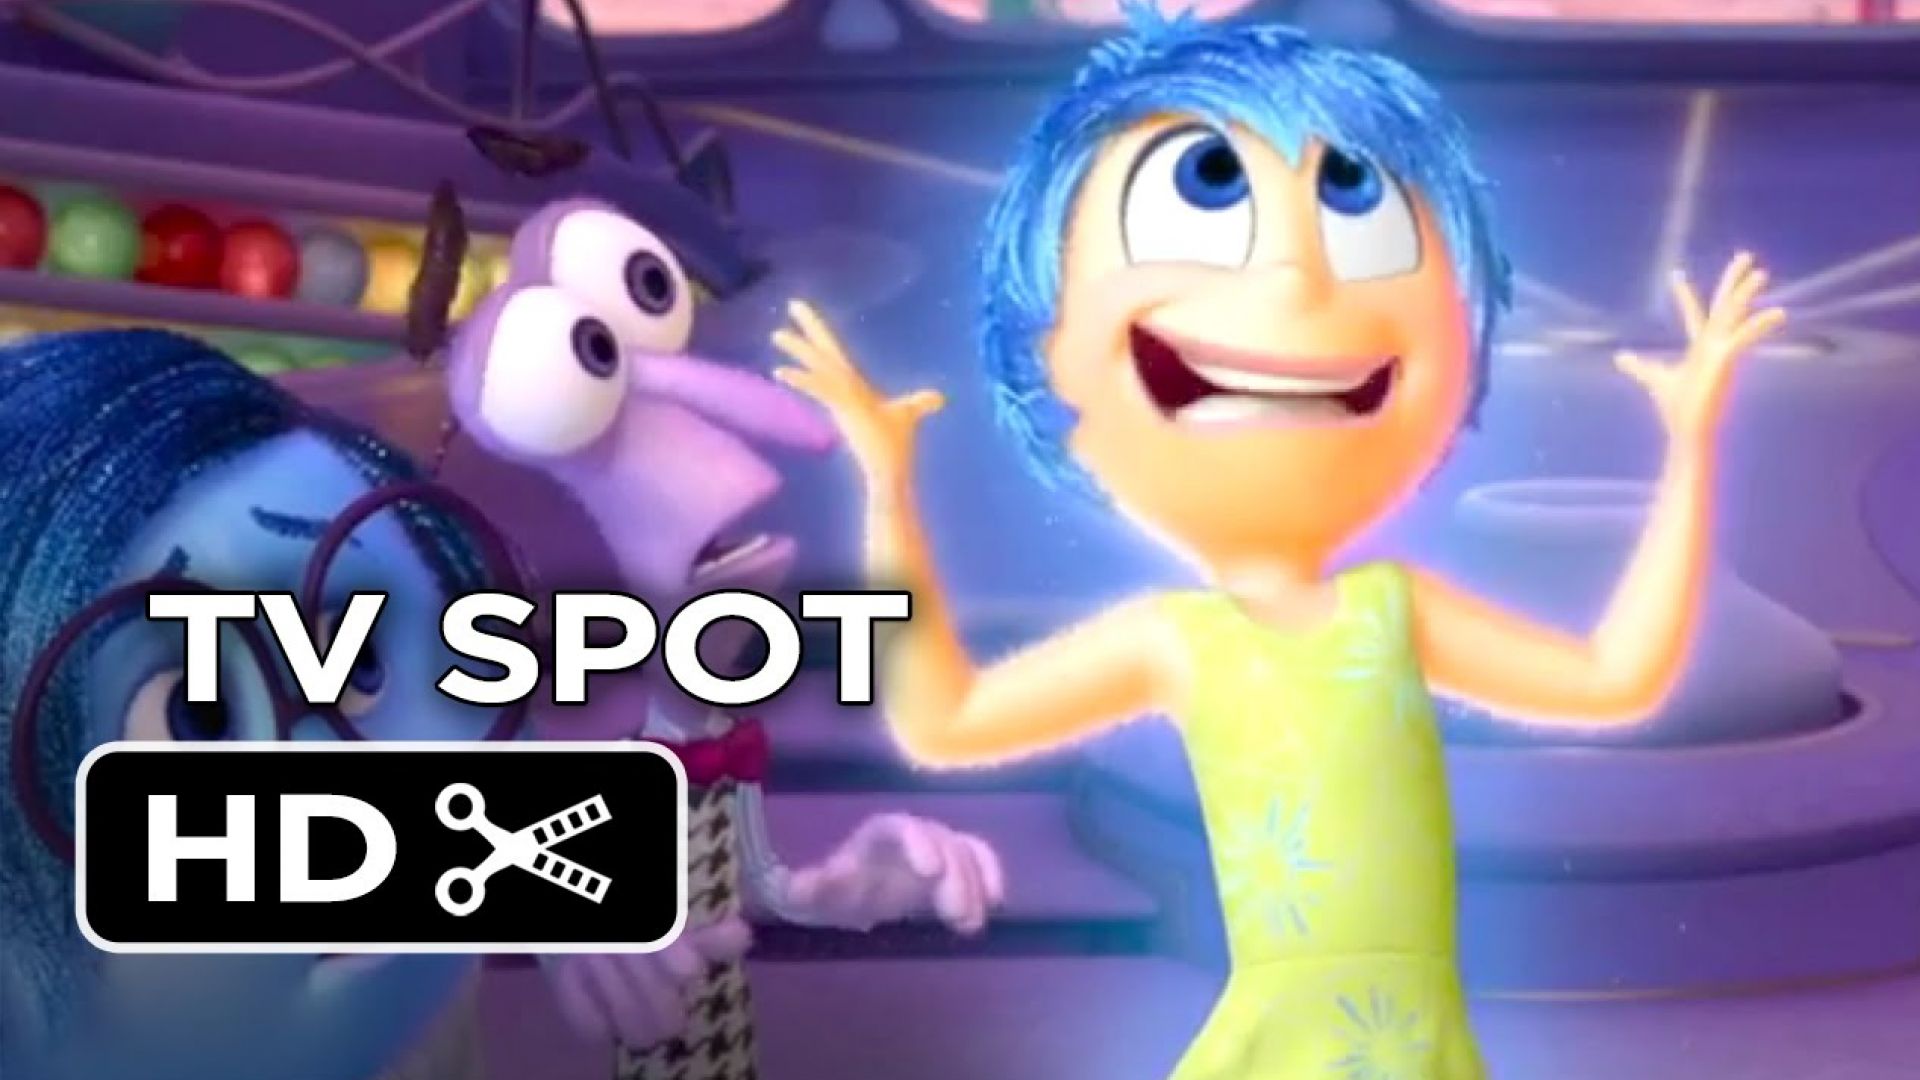 Amy Poehler is Joyful in New TV Spot for Pixar&#039;s &#039;Inside Out